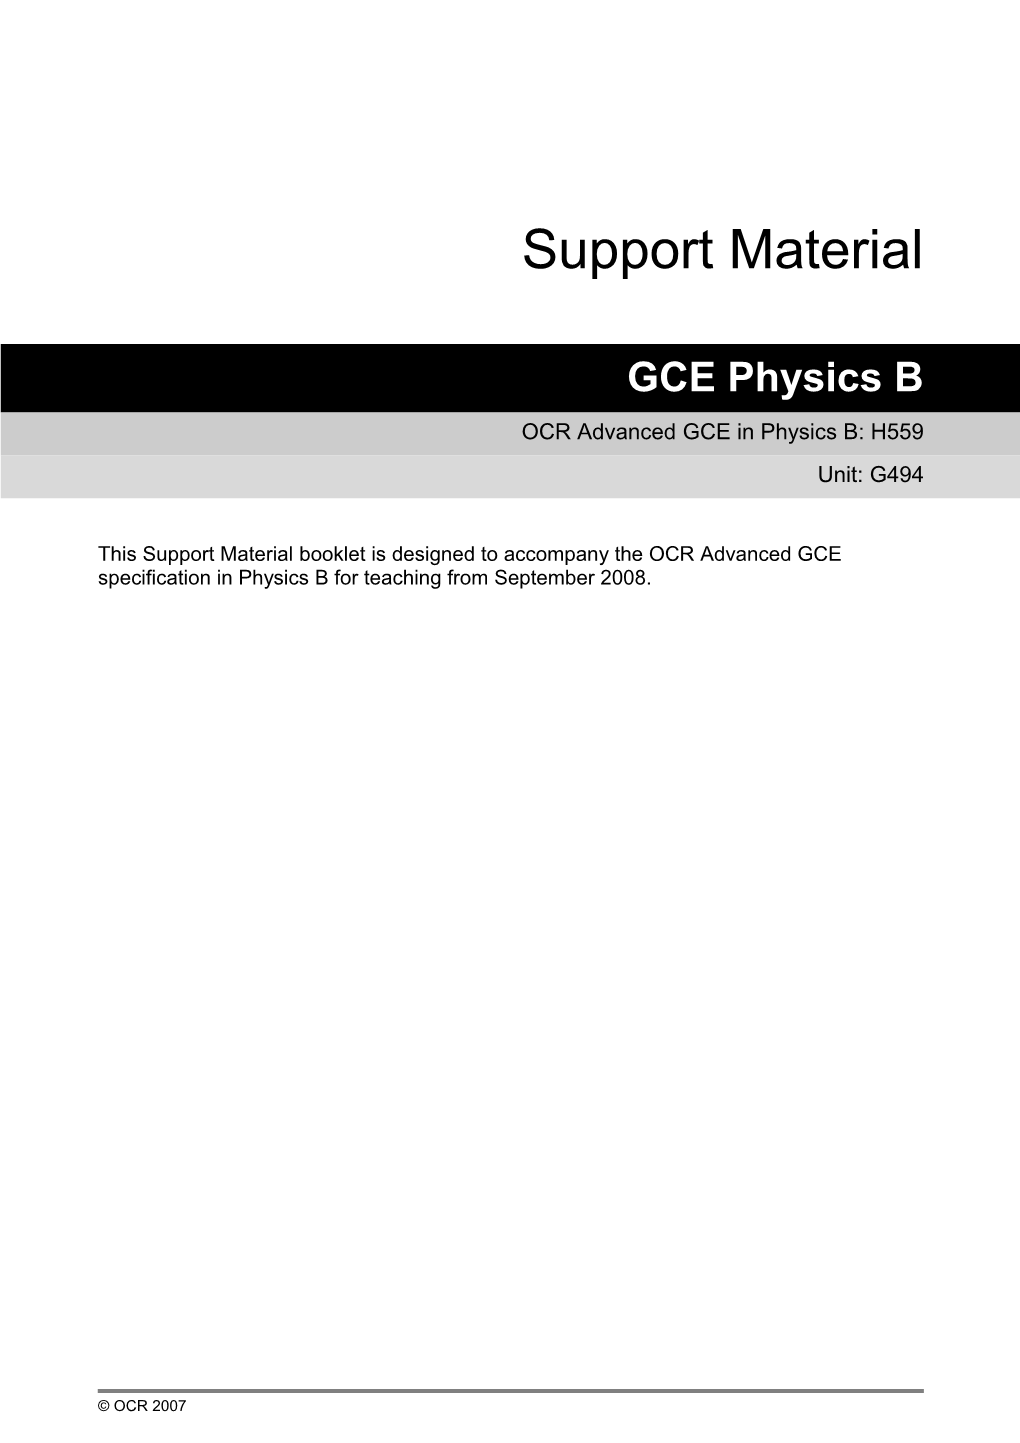 OCR Advanced GCE in Physics B: H559